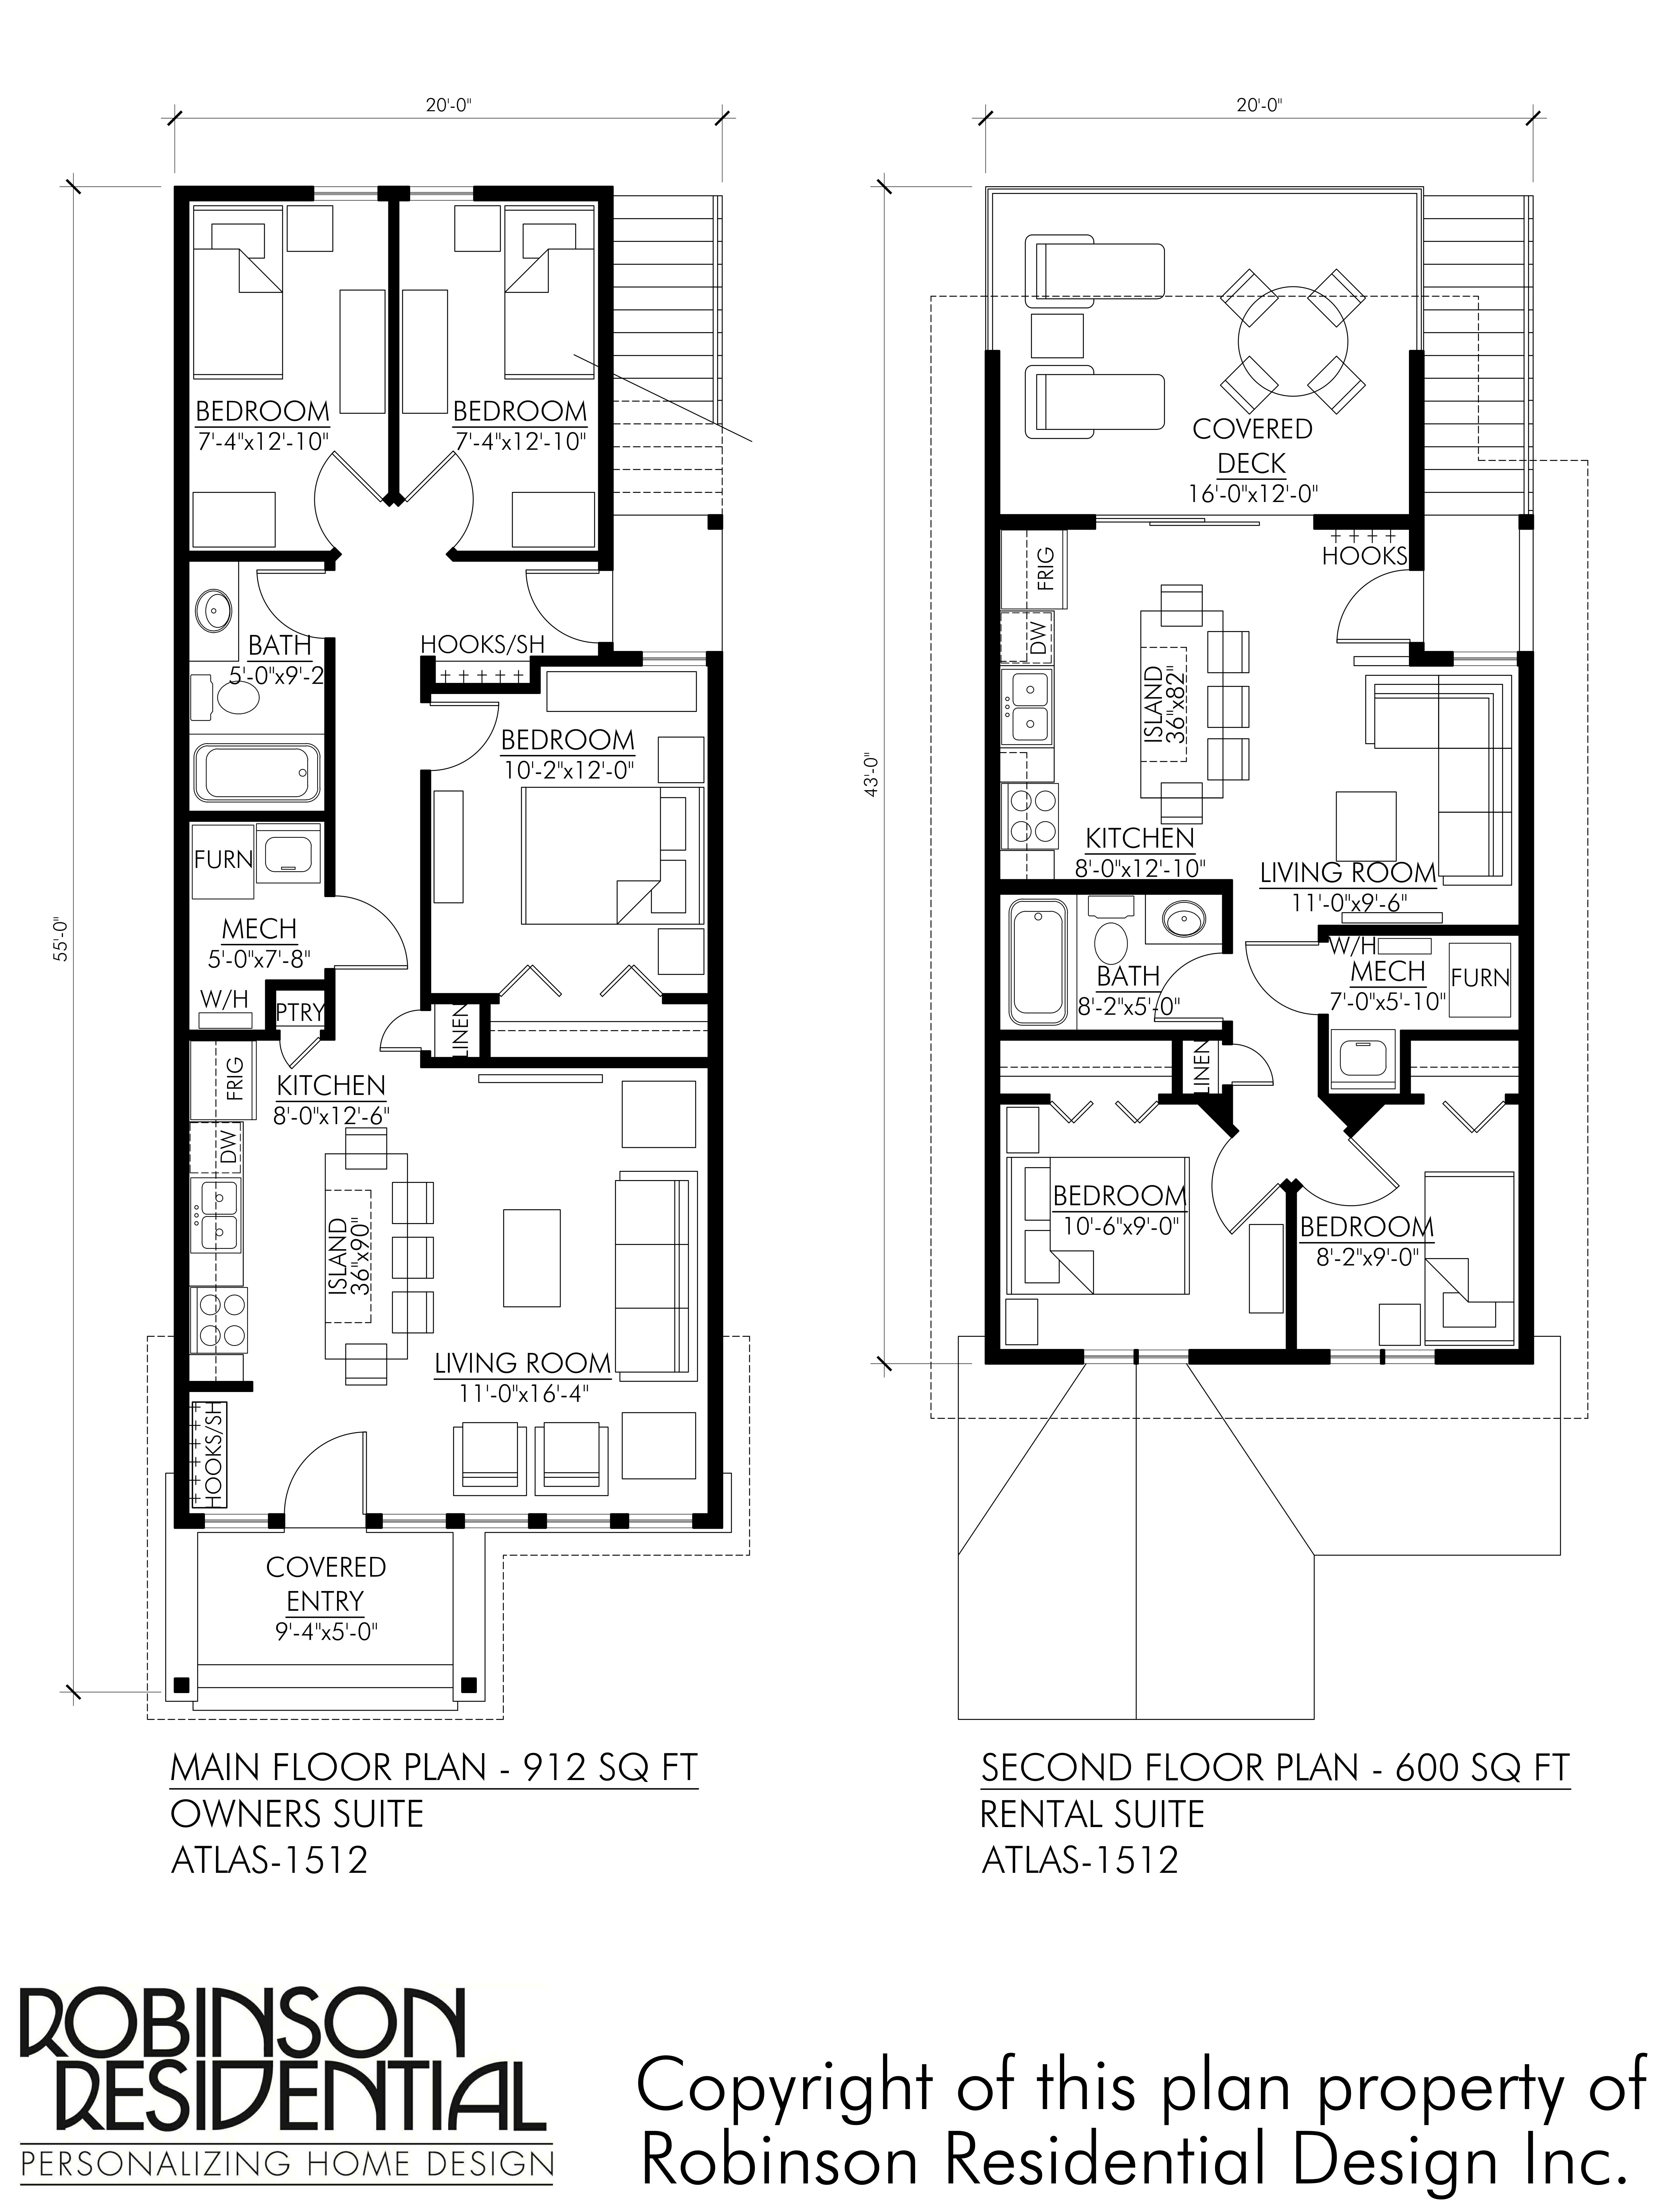 Craftsman Atlas 1512 Robinson Plans